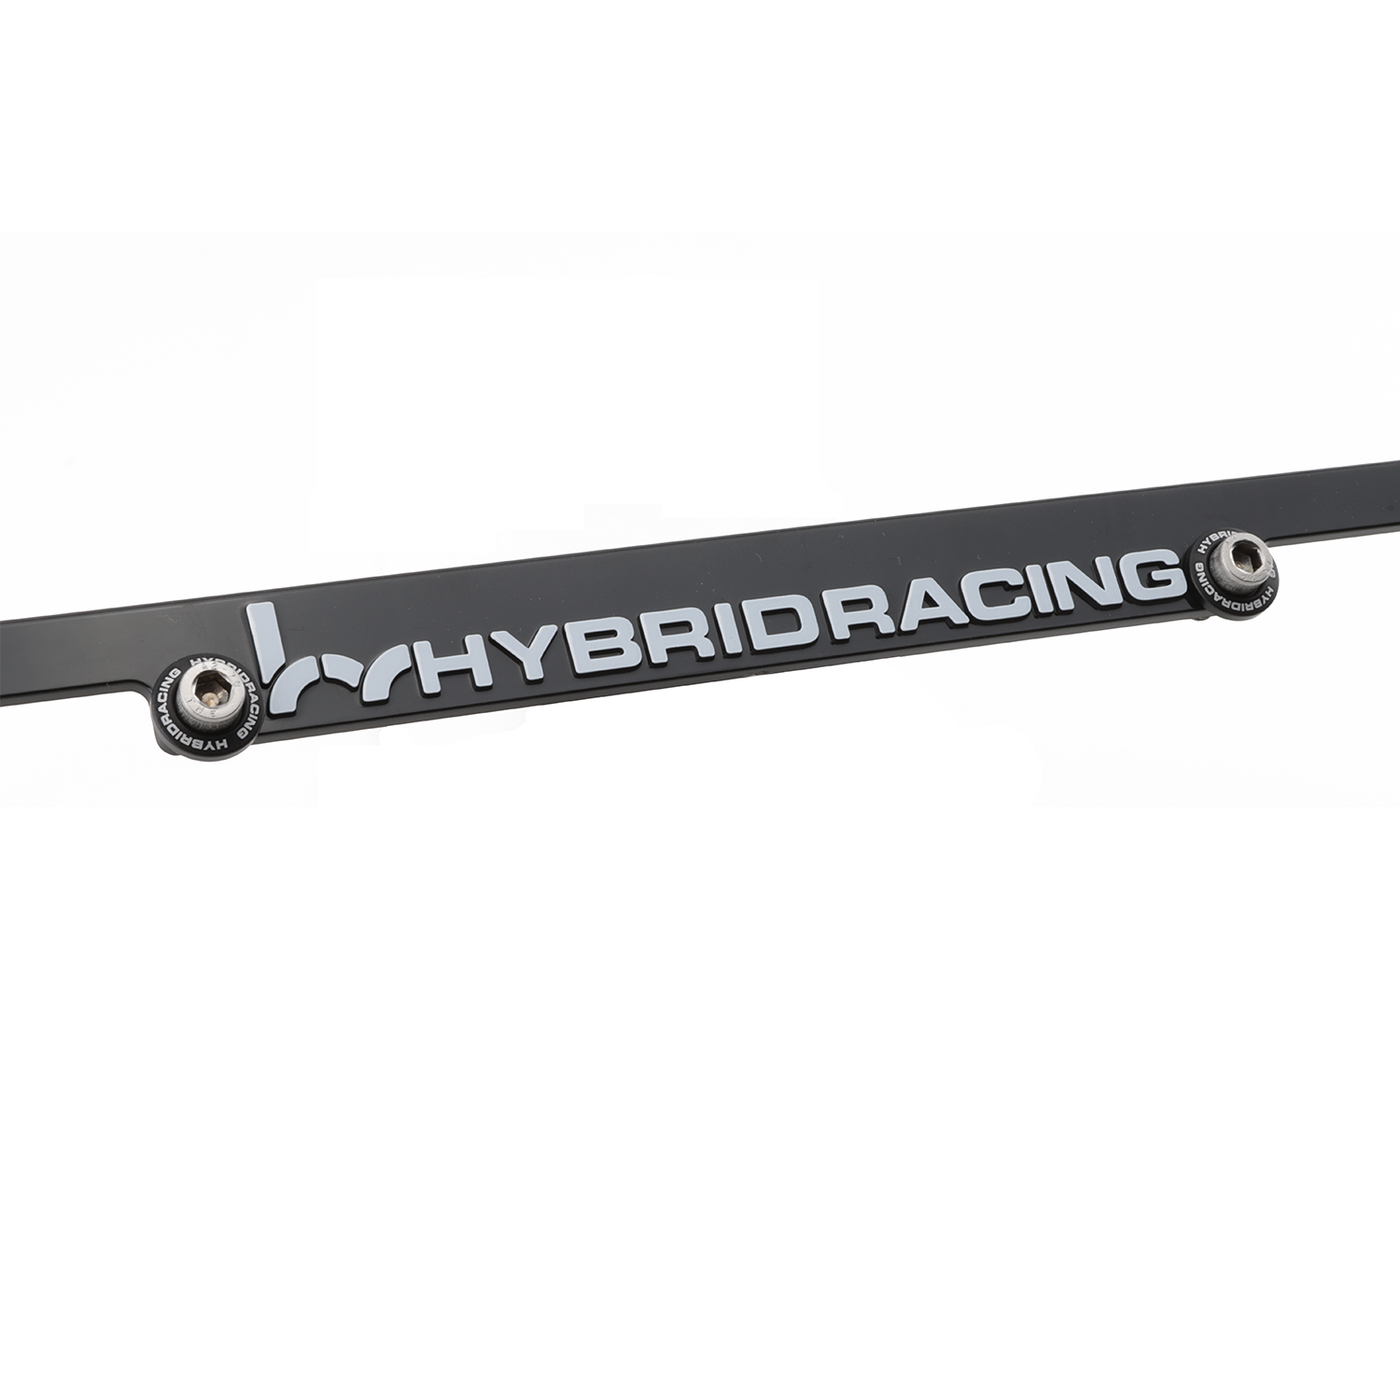 Hybrid Racing M6X1.0 Accessory Hardware Kit